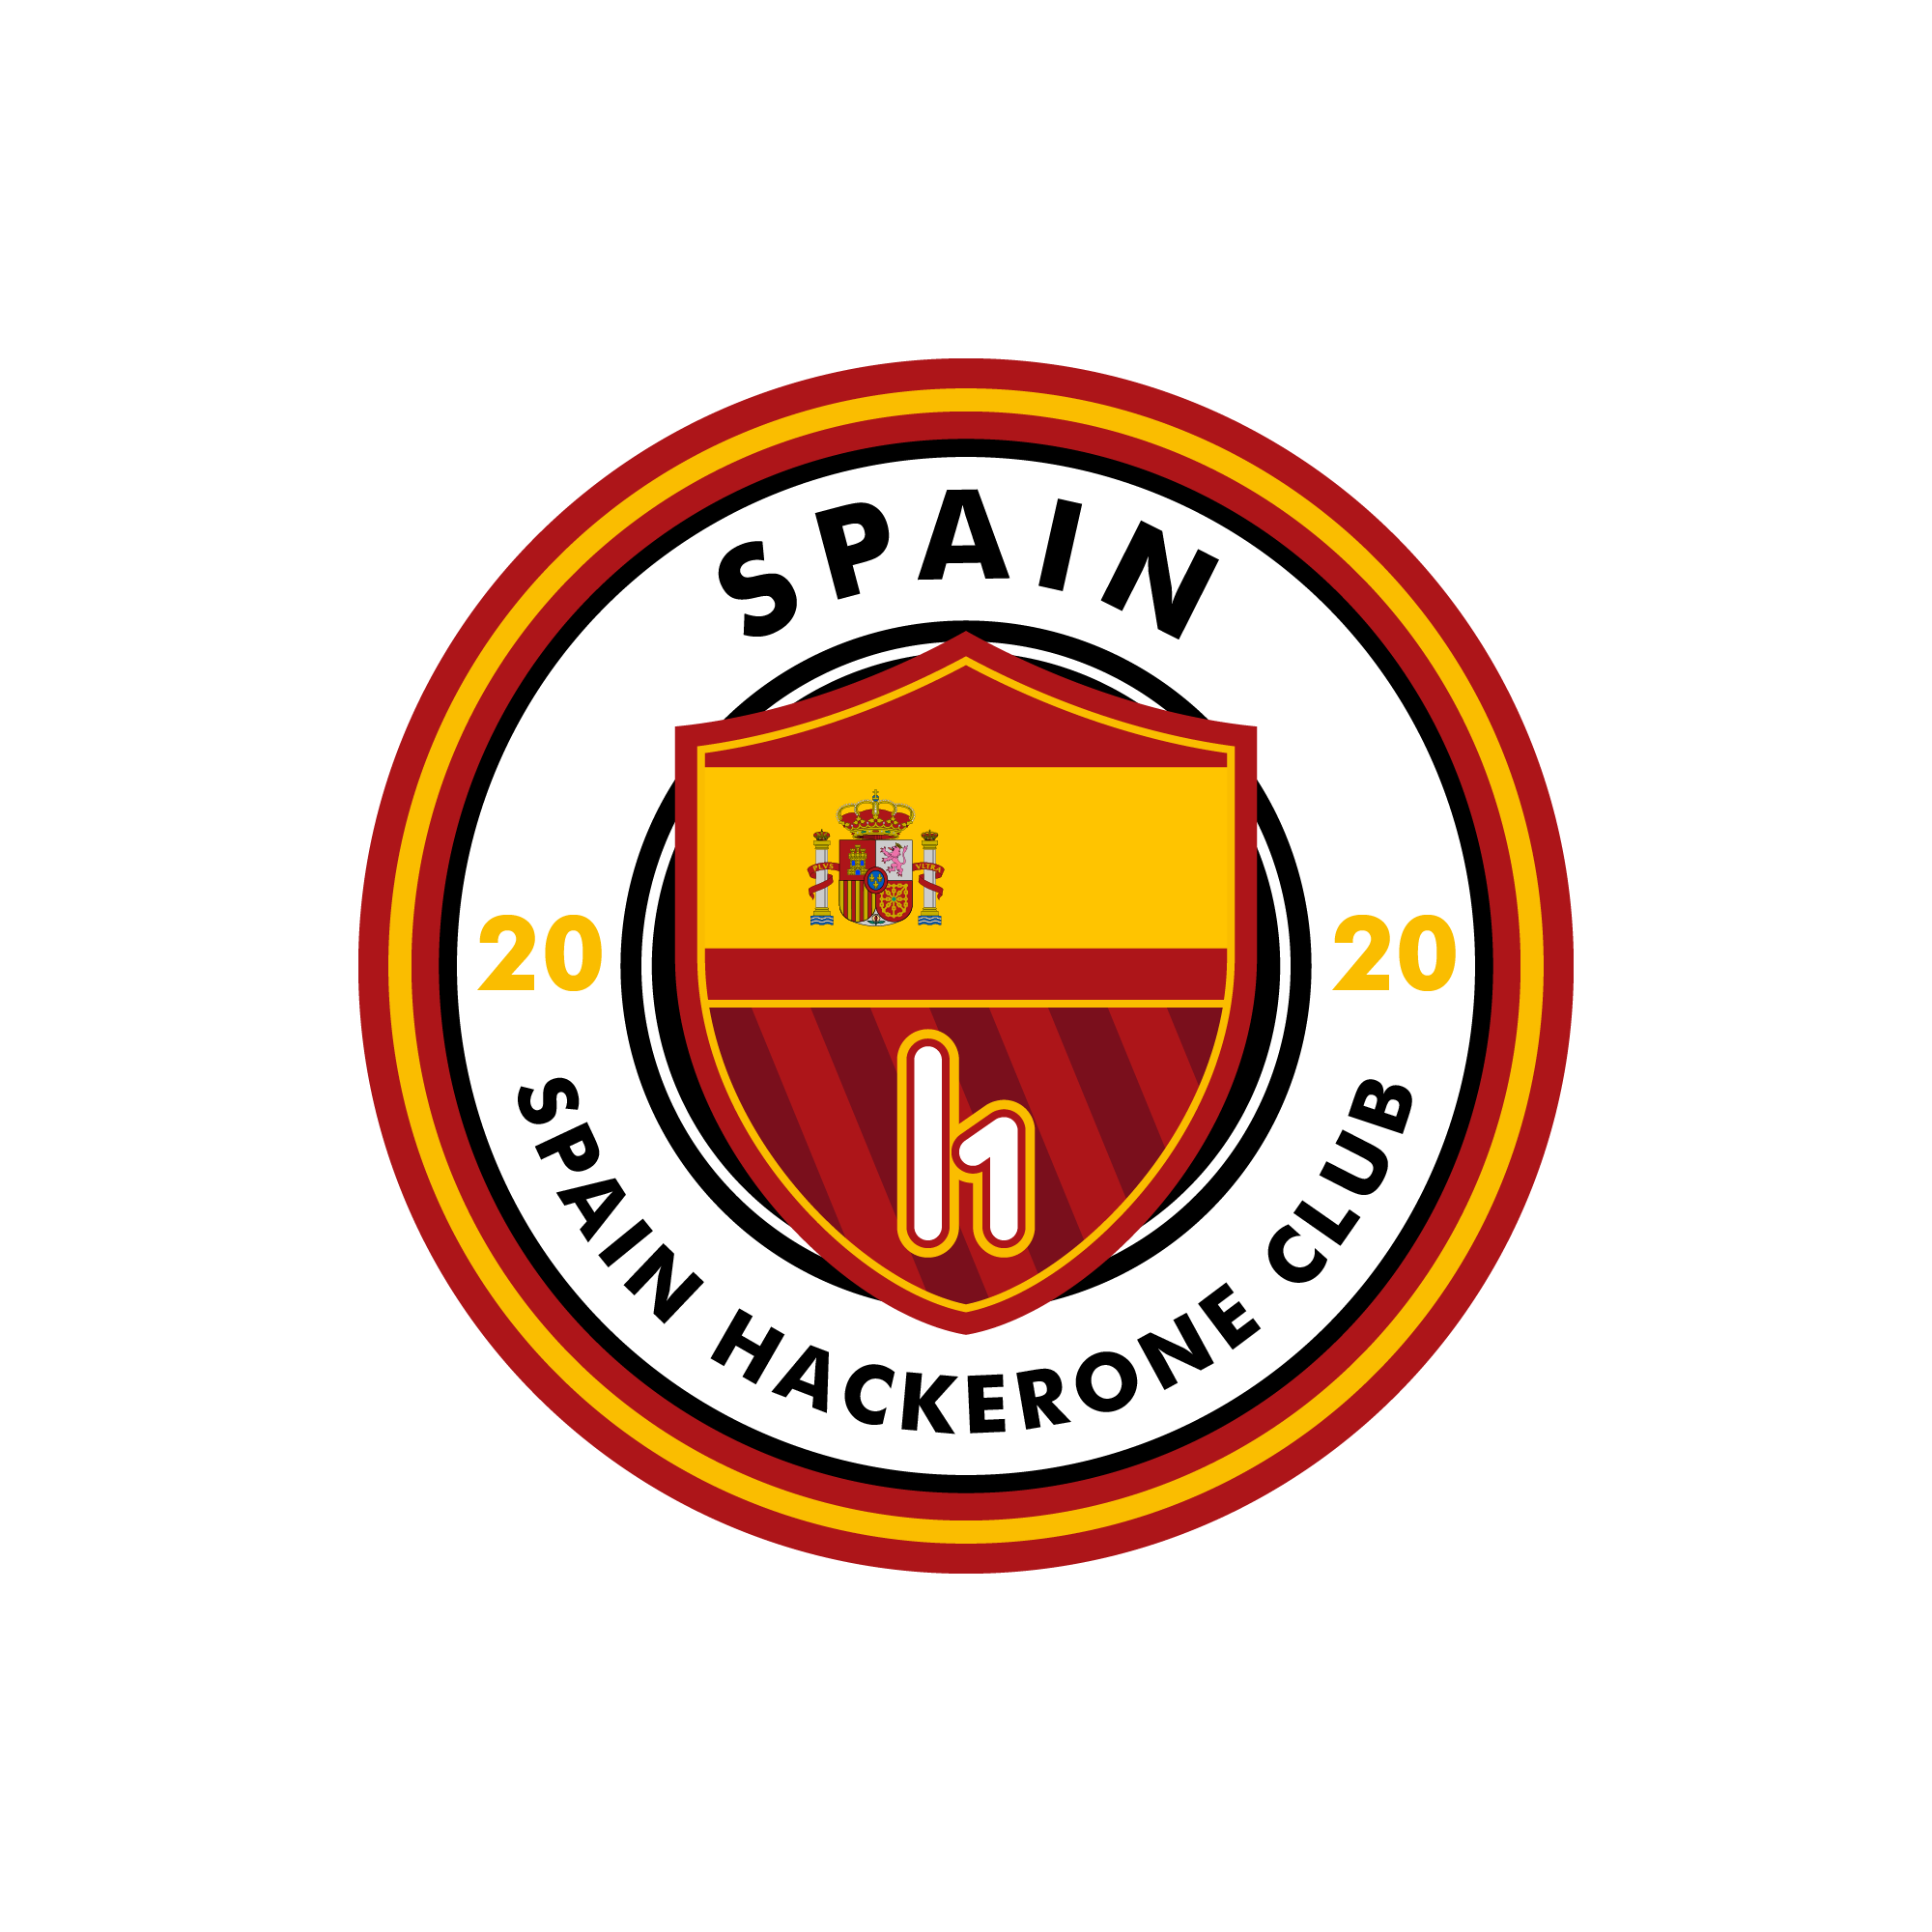 Spain Ambassador Club logo